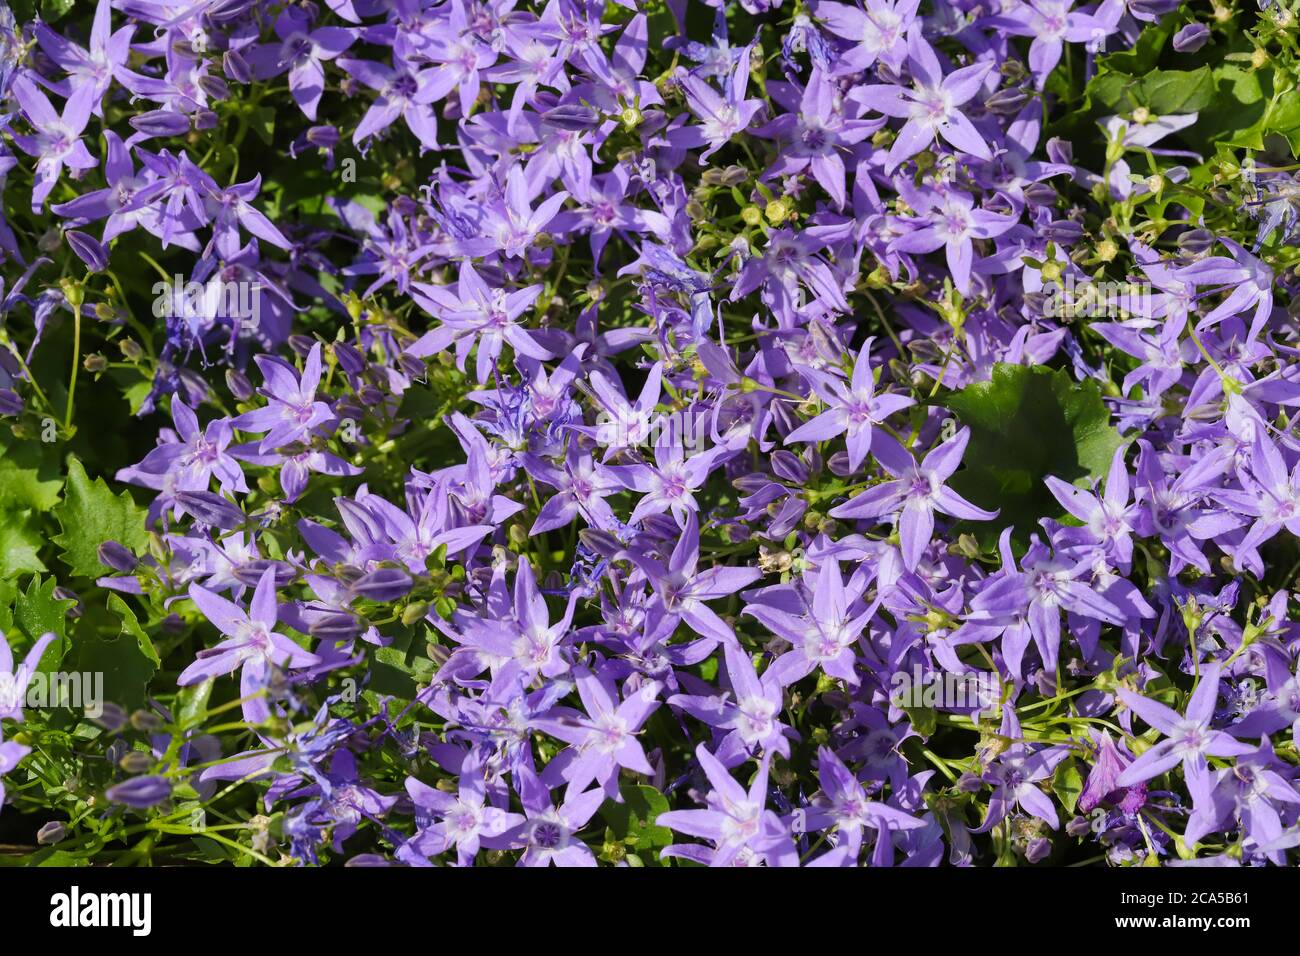 Close up of a mass of purple campanula flowers Stock Photo